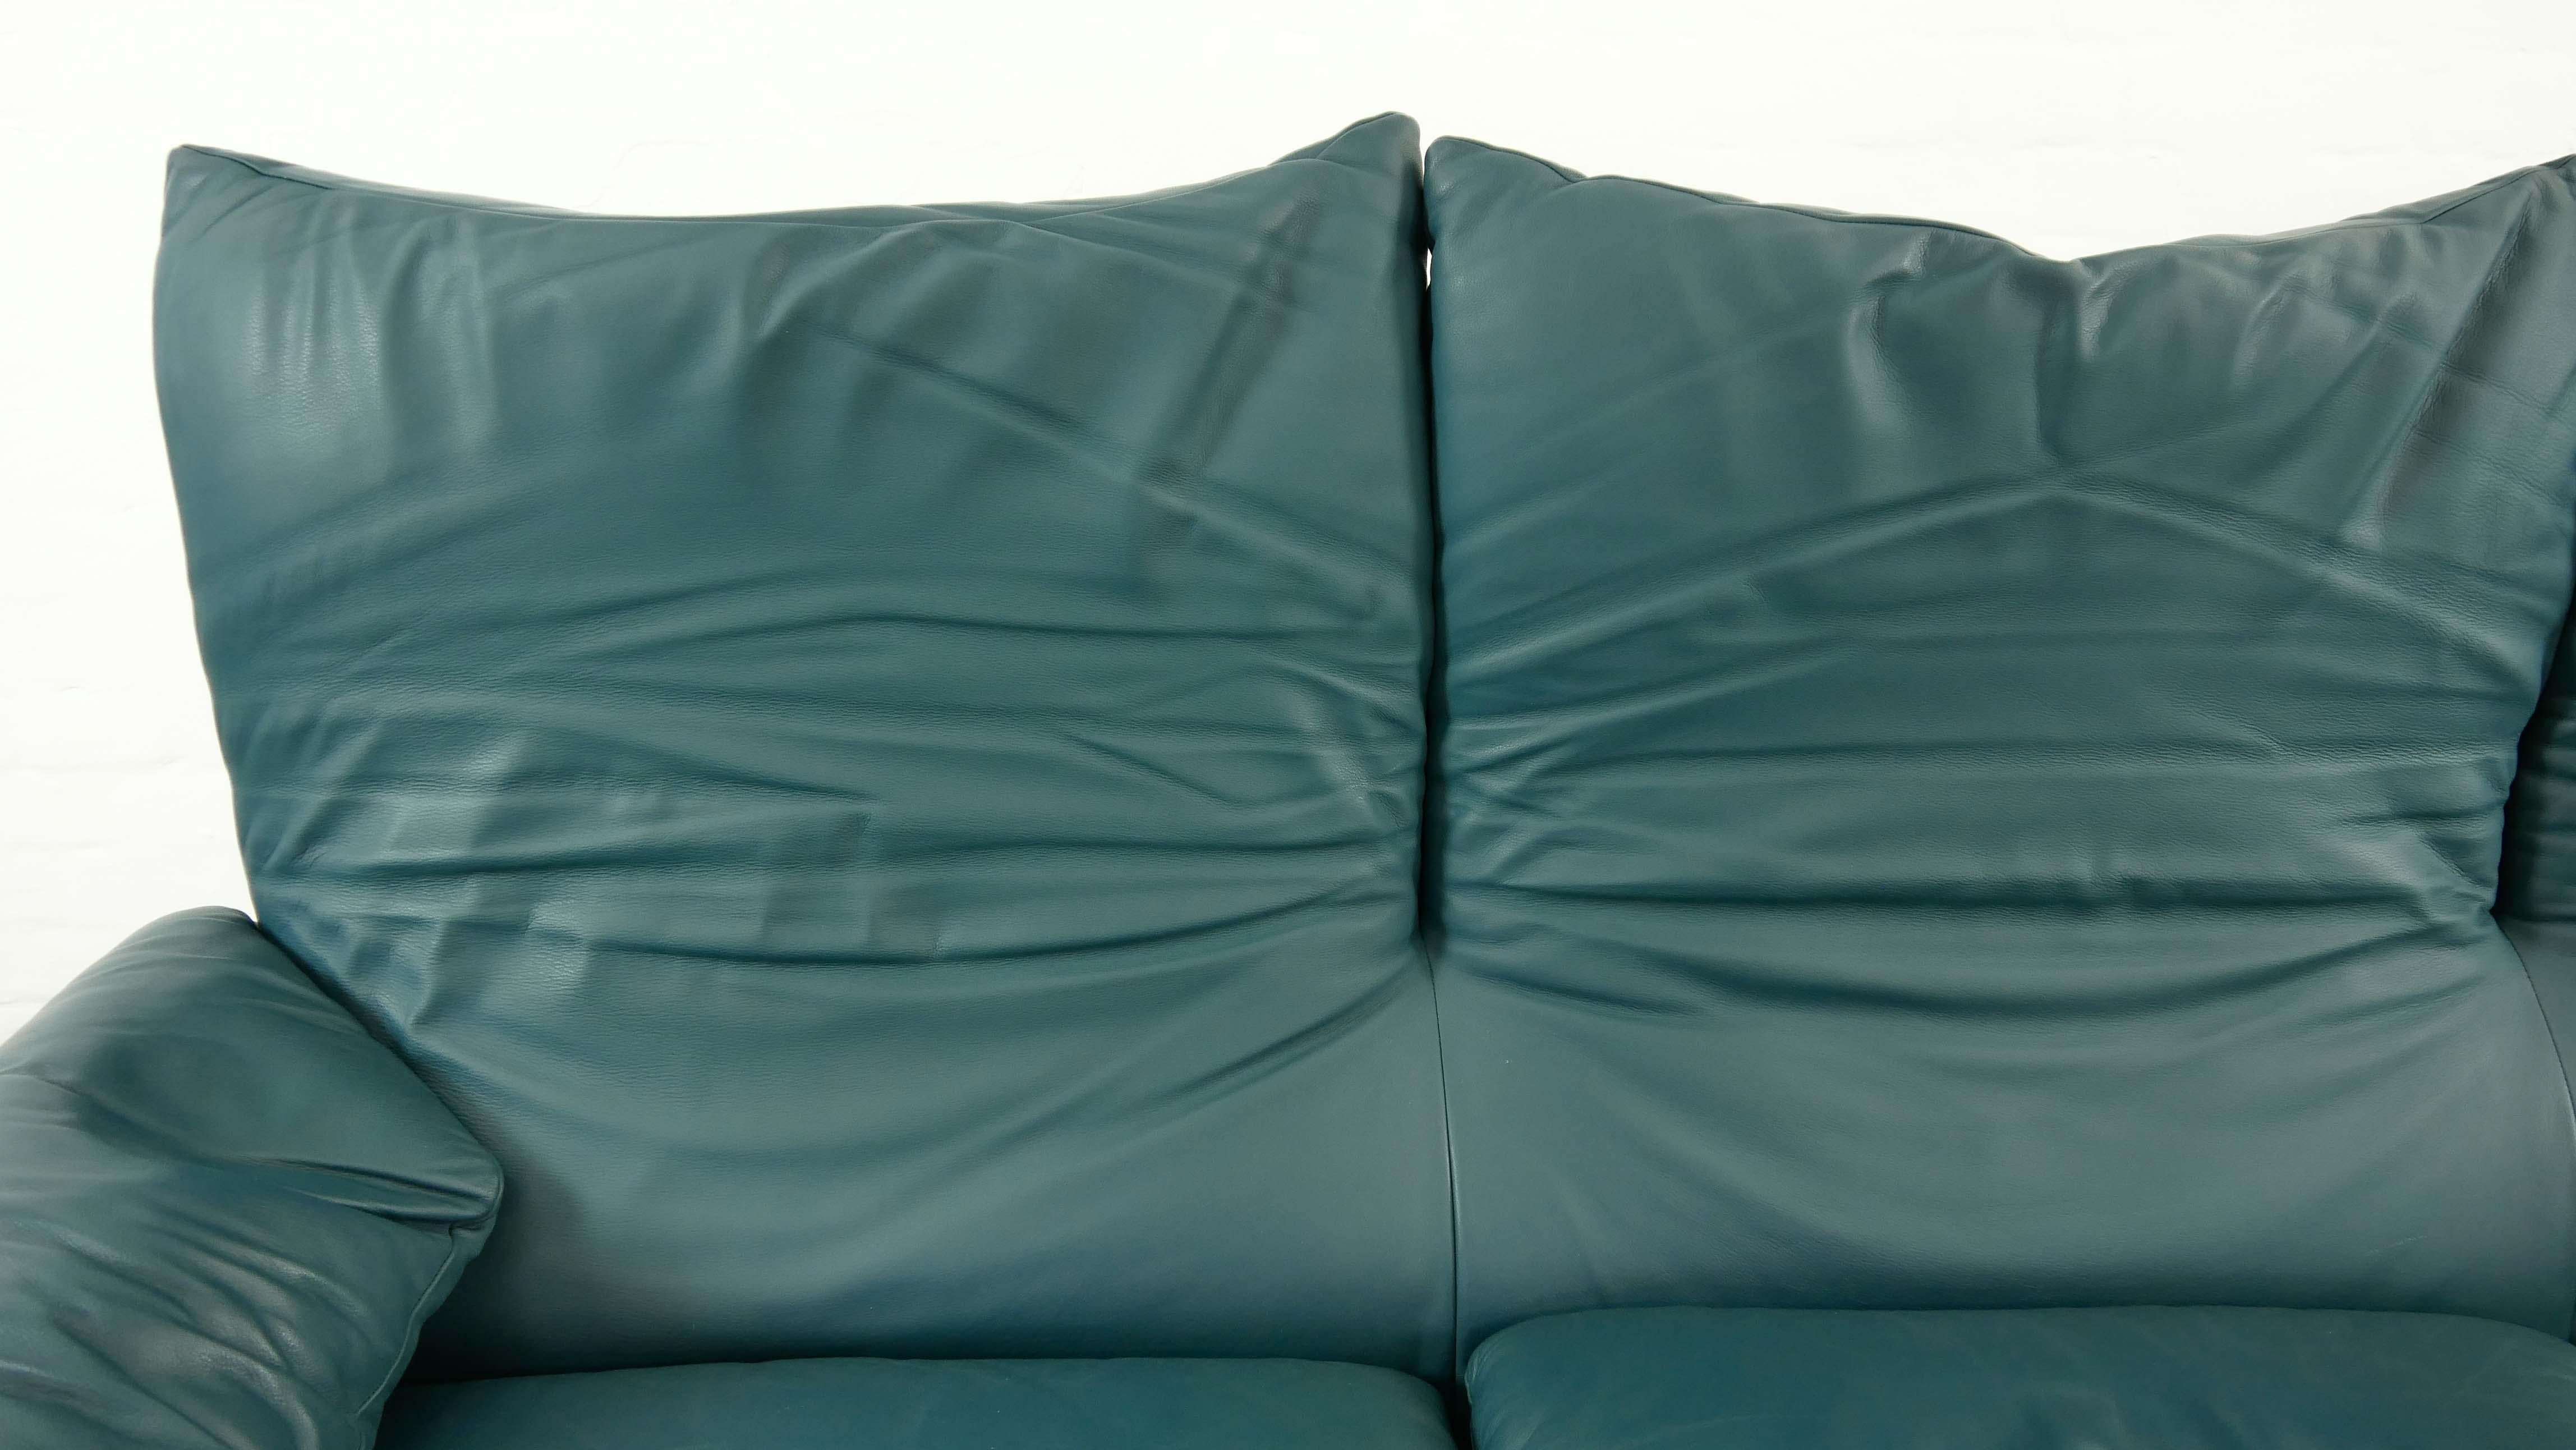 Cassina Maralunga 3-Seat Sofa by Vico Magistretti in Petrol-Darkgreen Leather 7